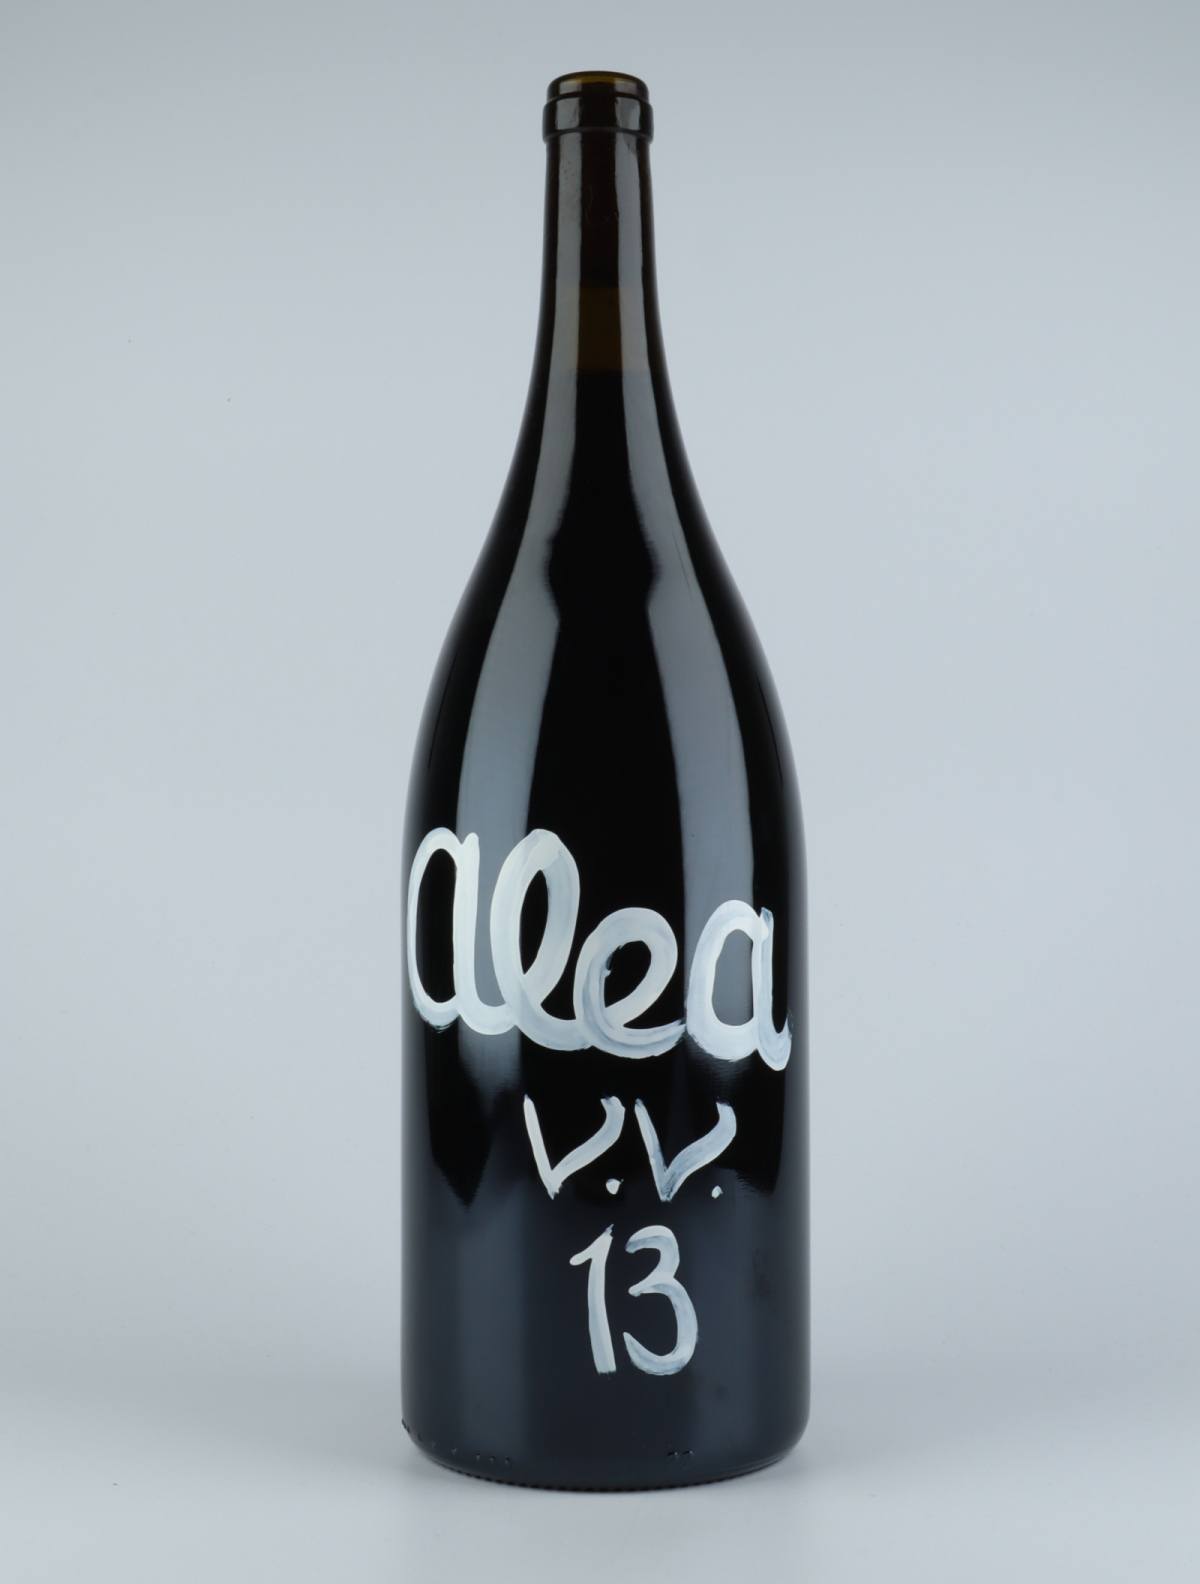 A bottle 2013 Alea VV Red wine from Le Coste, Lazio in Italy